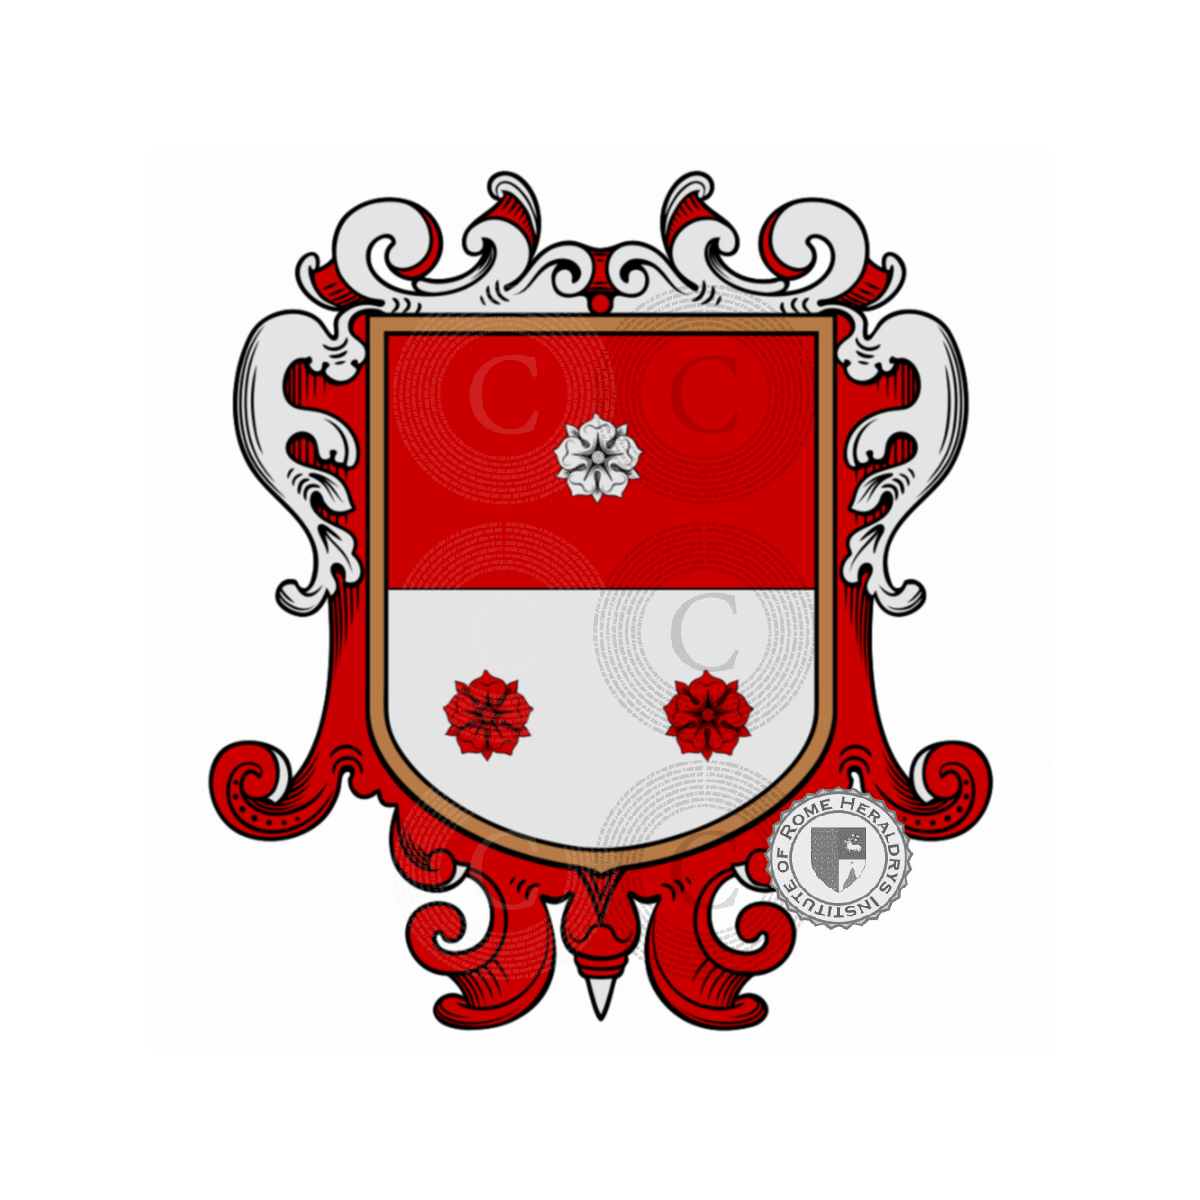 Wappen der FamilieScarlatti, Scarlatti del Lion Rosso,Scarlatti delle Stelle,Scarlatti Rondinelli